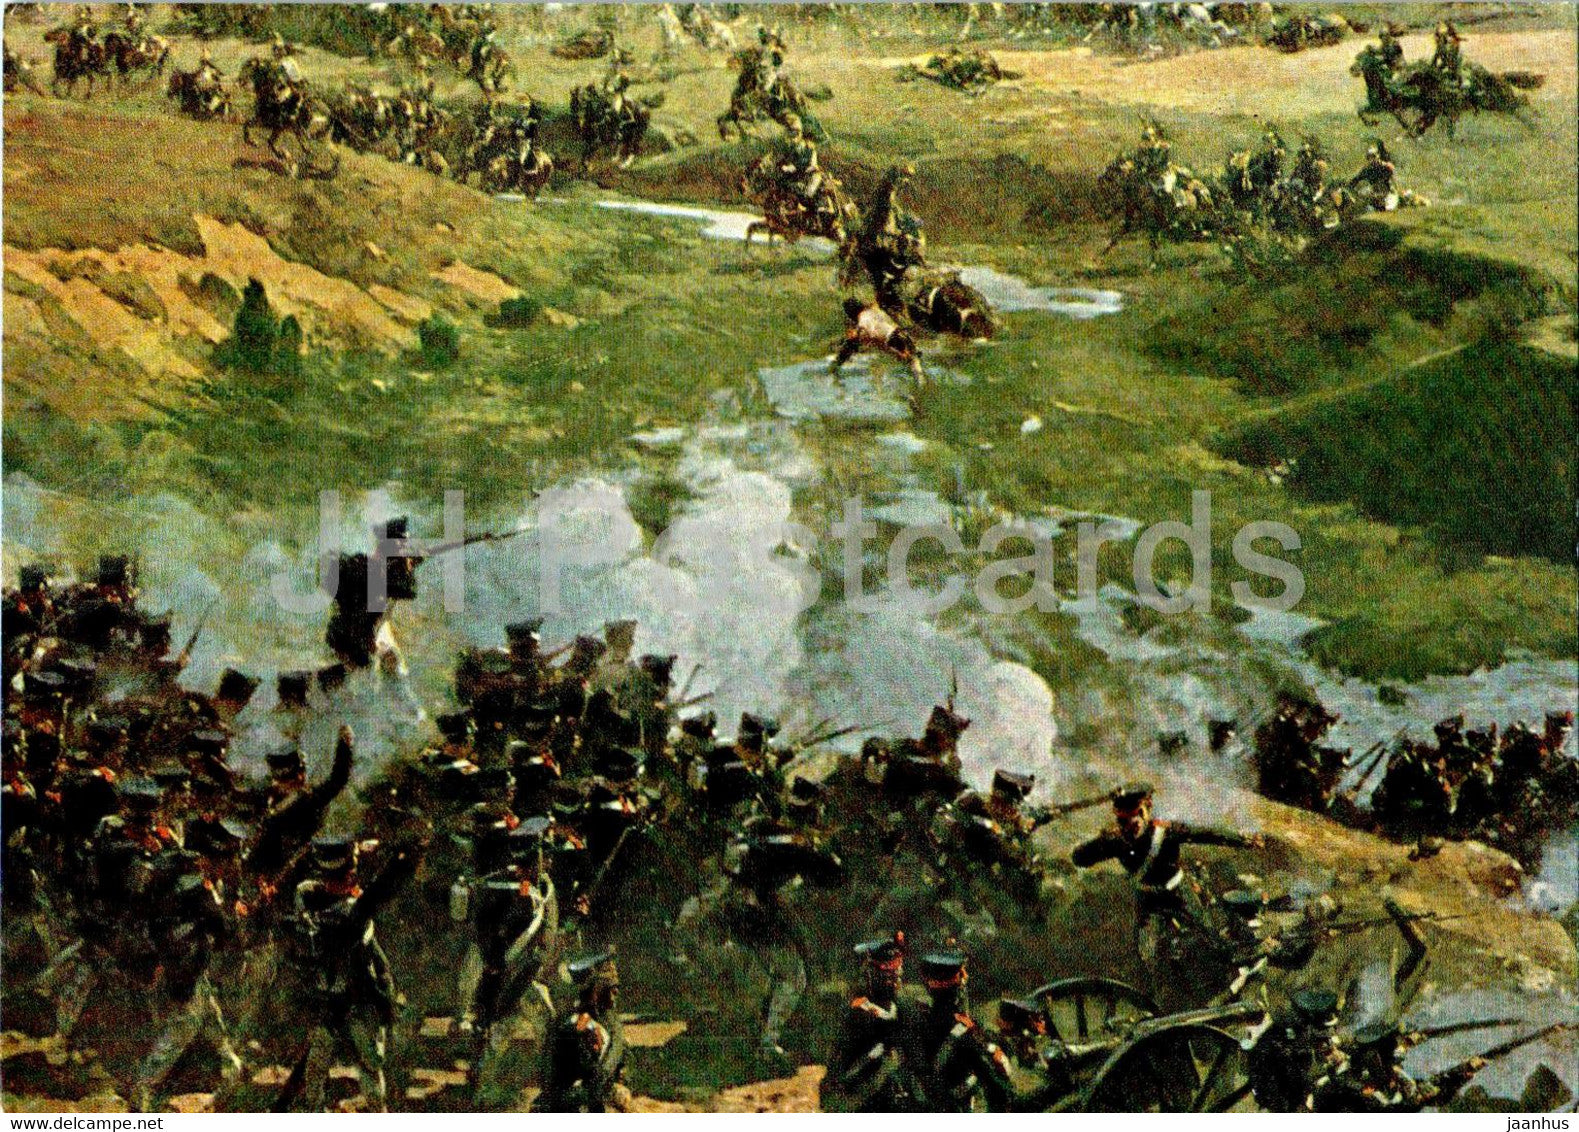 Battle of Borodino - Semyonovsk ravine - panorama - painting by F. Rubo - 1967 - Russia USSR - unused - JH Postcards